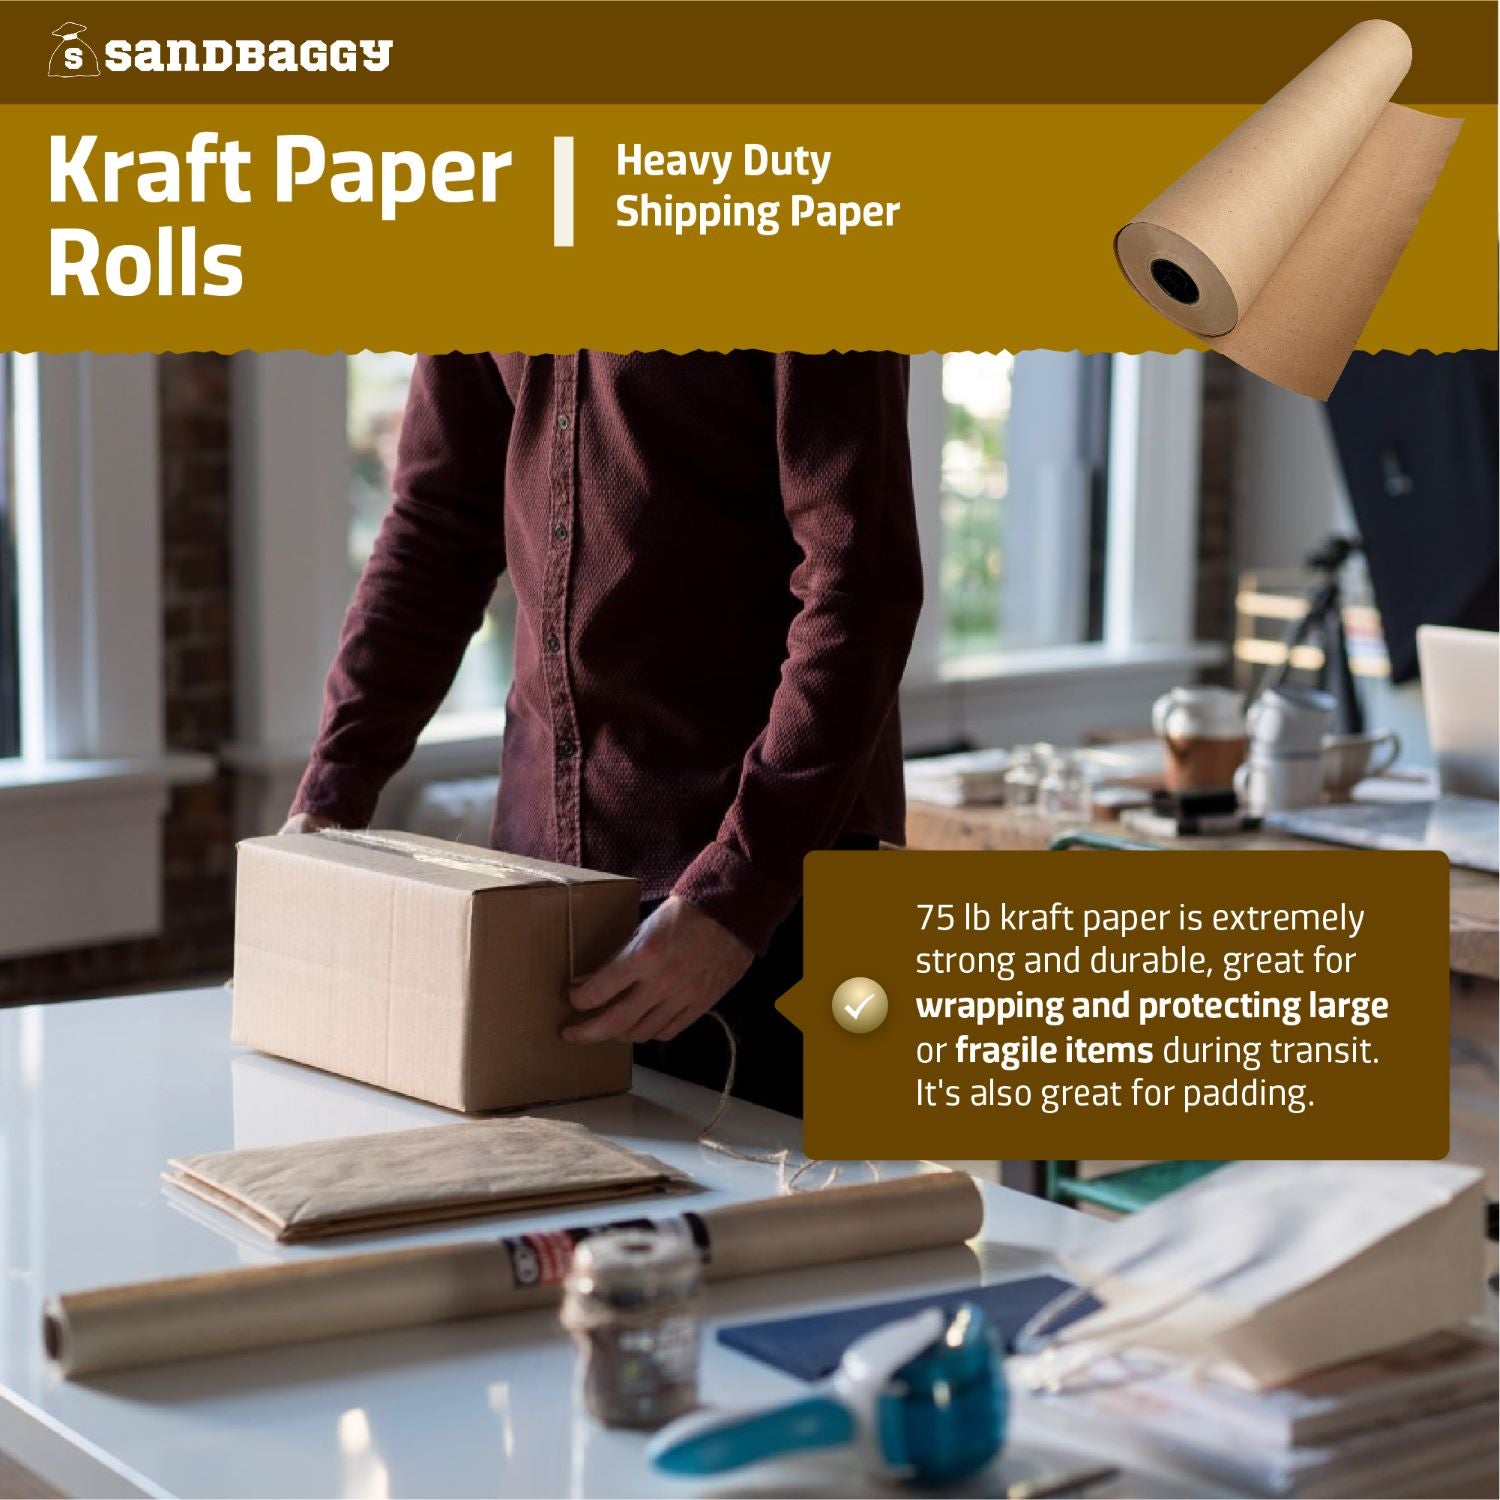 Heavy Duty Kraft Paper Rolls - 75 lb. Recycled Paper (Brown)